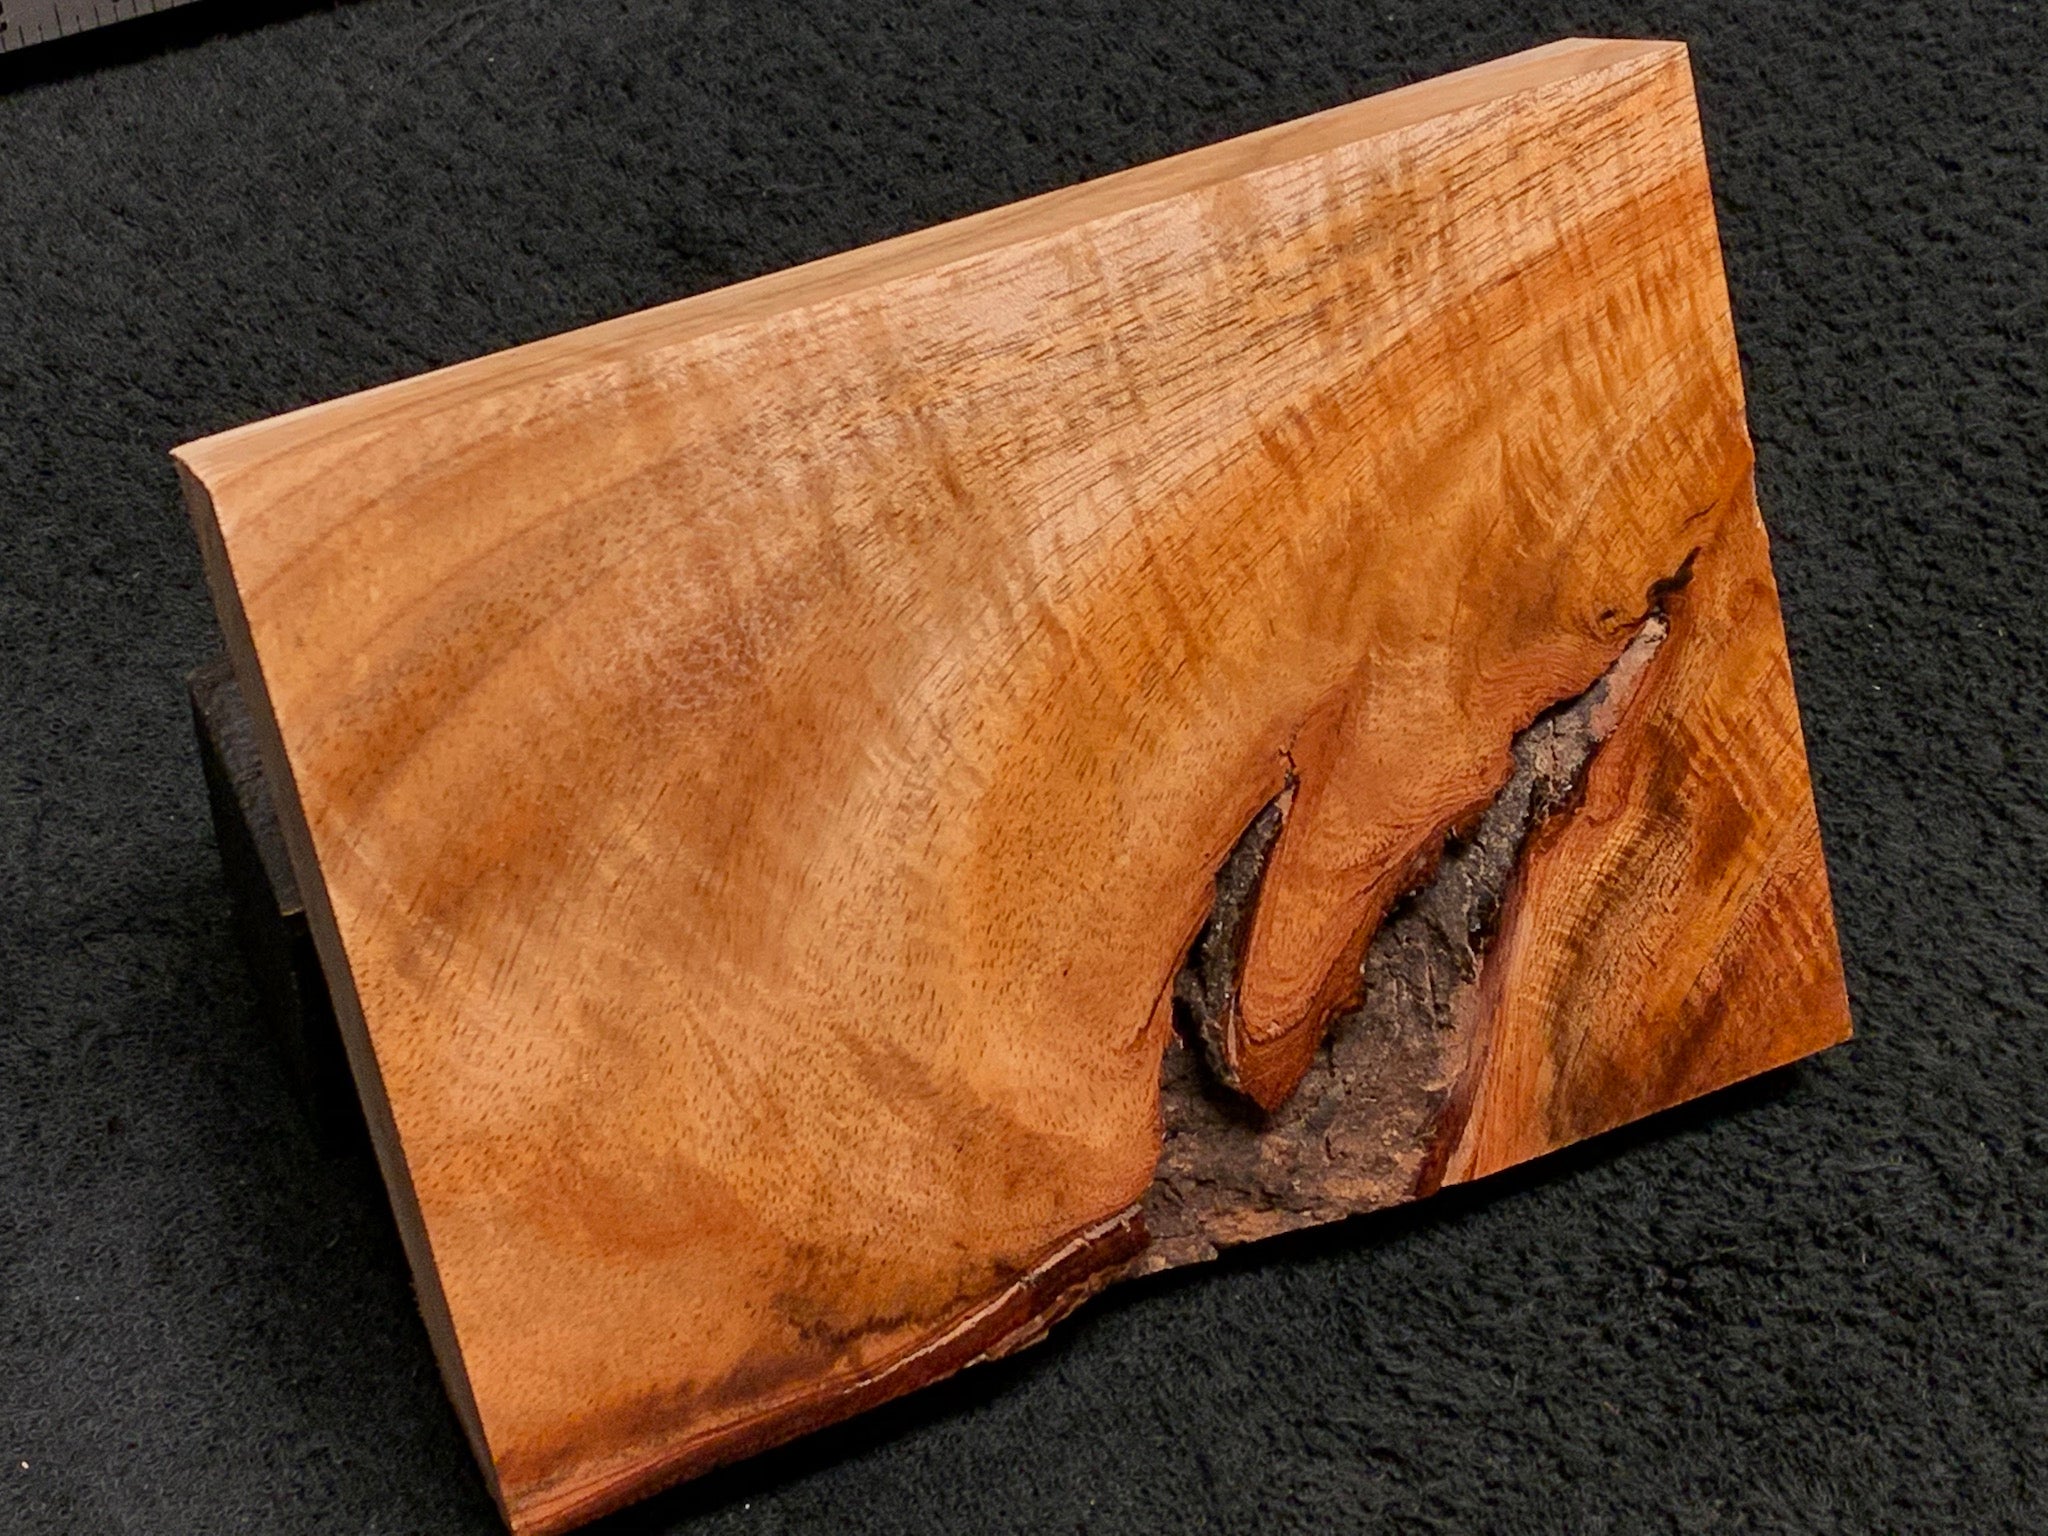 PREMIUM Alii Warrior Solid Curly KOA Wood Paddle. - Ripple effect - Made in  Hawaii